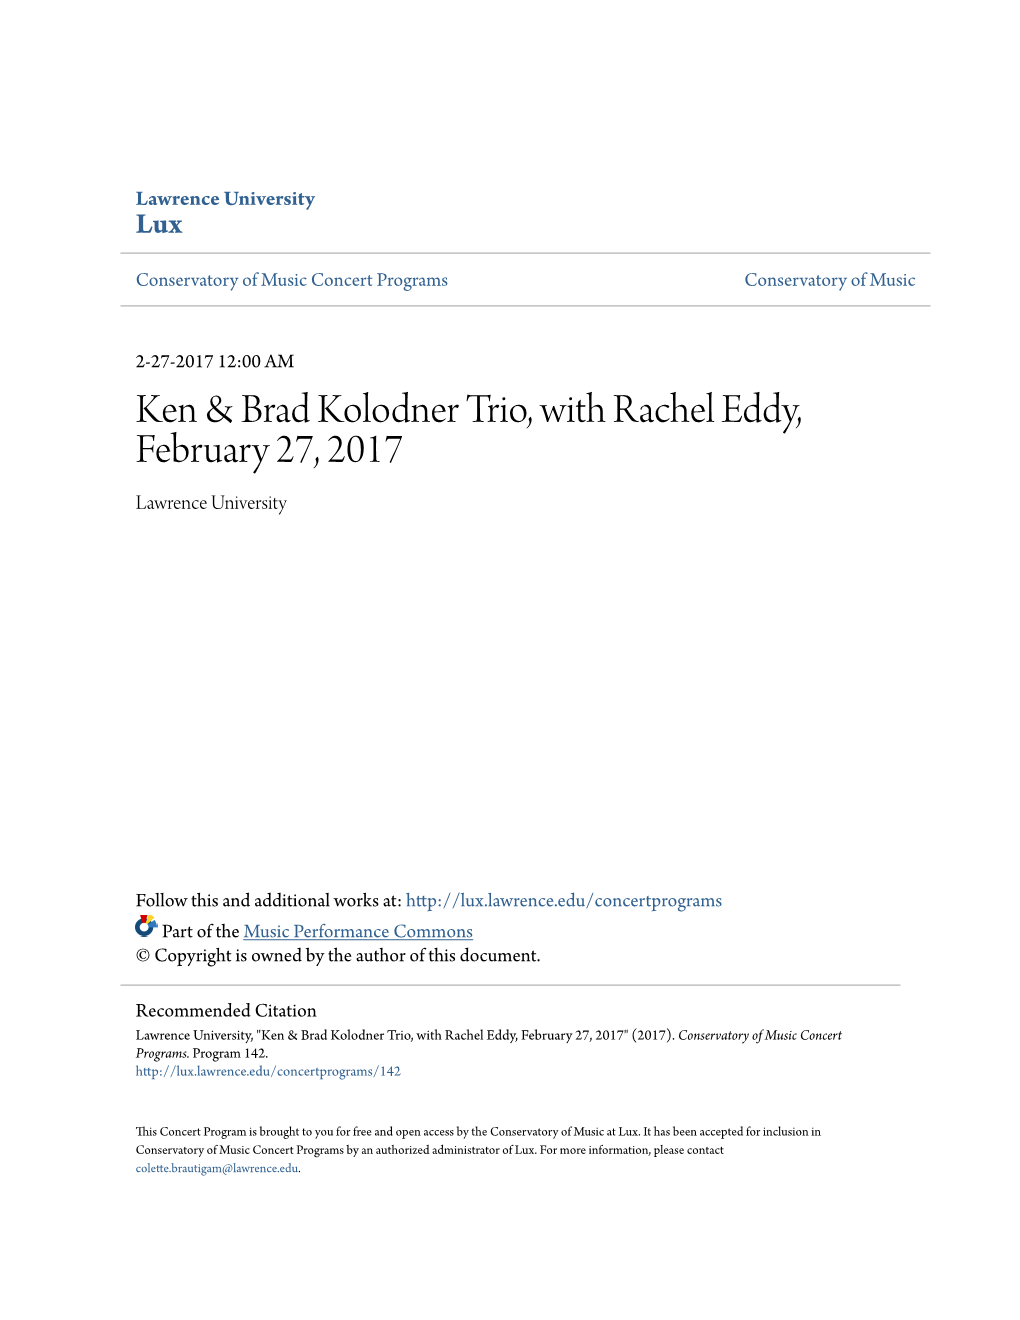 Ken & Brad Kolodner Trio, with Rachel Eddy, February 27, 2017